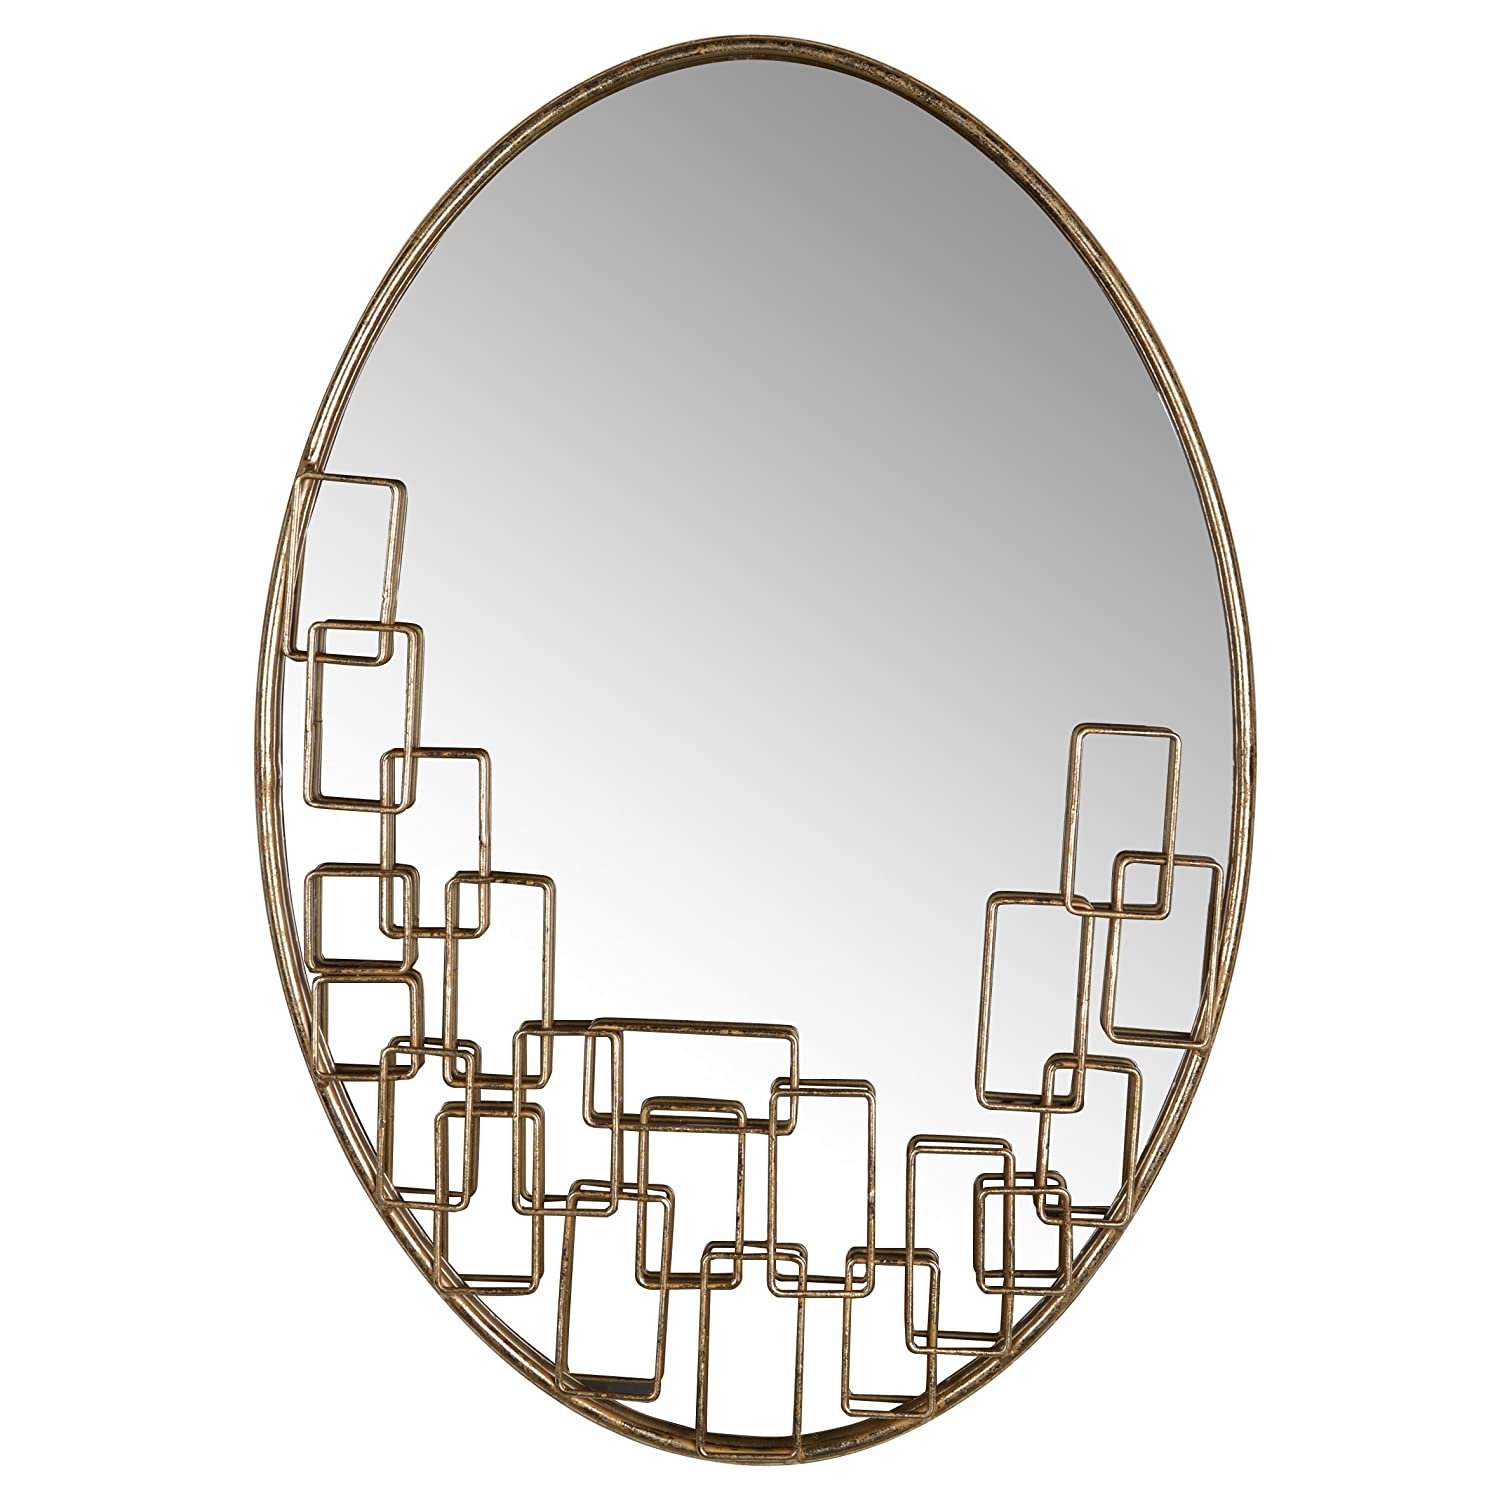 Зеркало настенное 60. Зеркало настенное овальное 51х61 см золото Orio от Schuller. Зеркало “Gold Mirror” 60х80 см. Зеркало настенное длинное. Напольное зеркало овал.